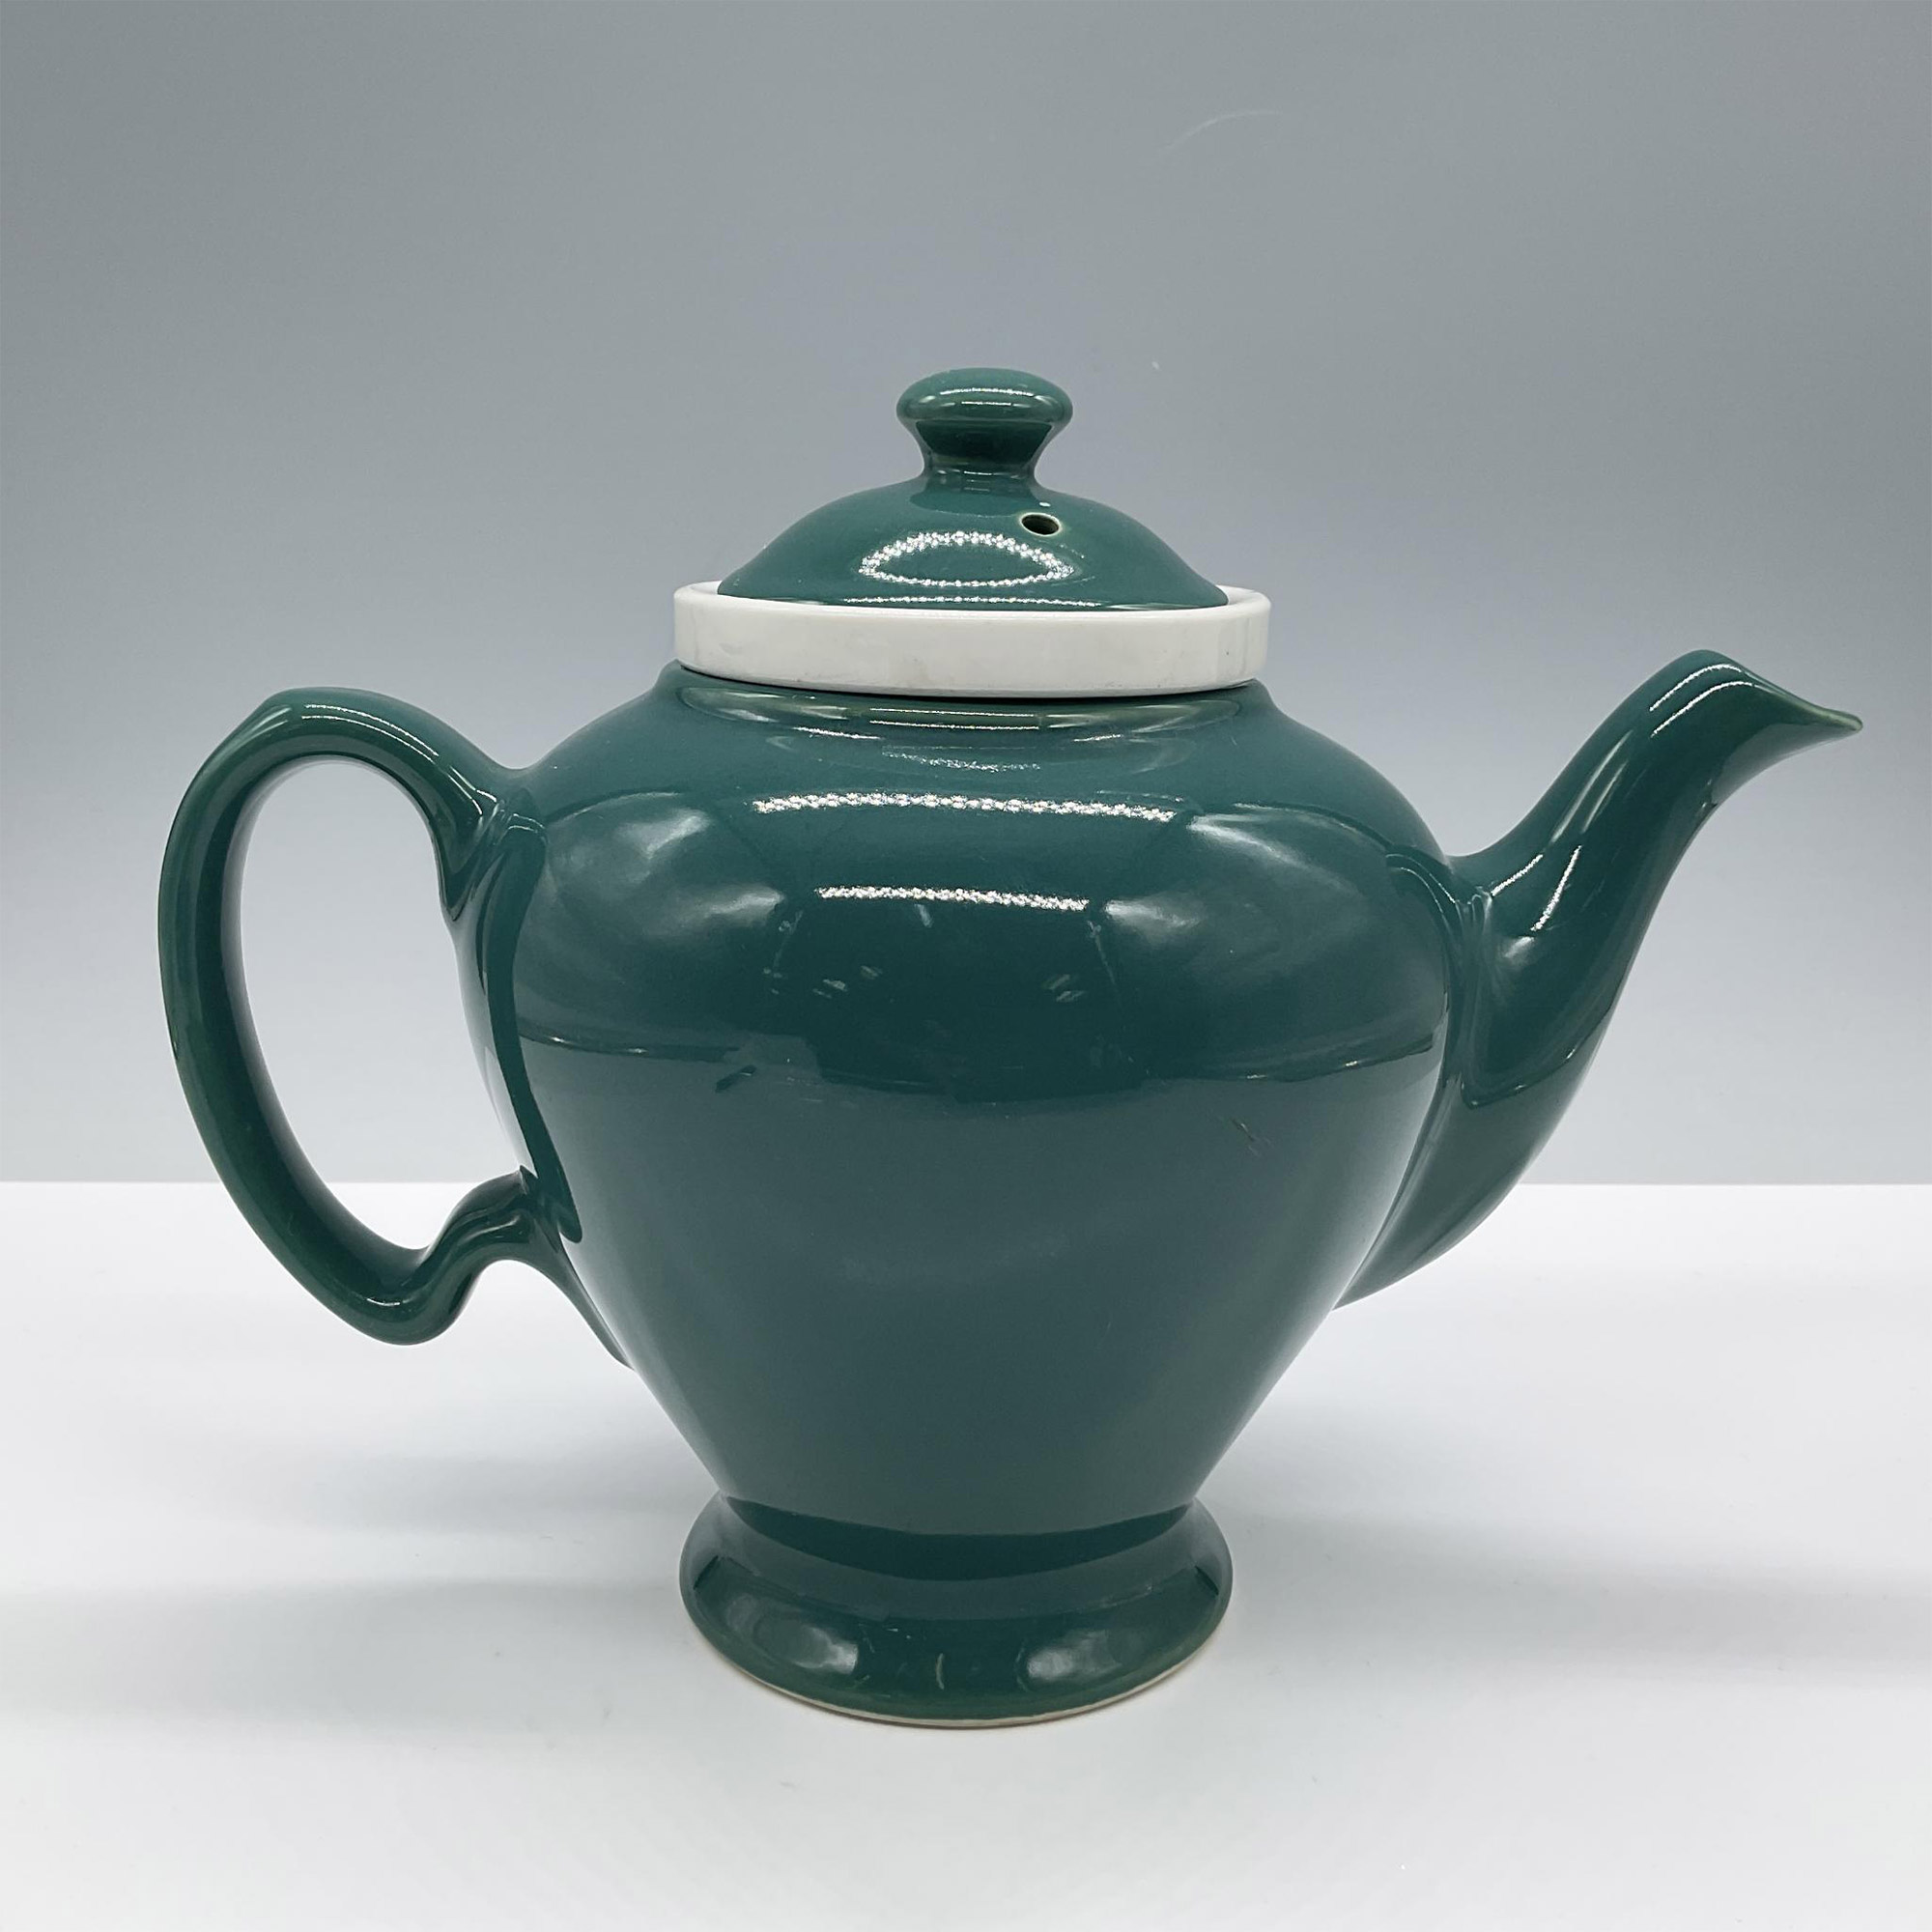 McCormick Porcelain Lidded Tea Pot with Infuser, Baltimore